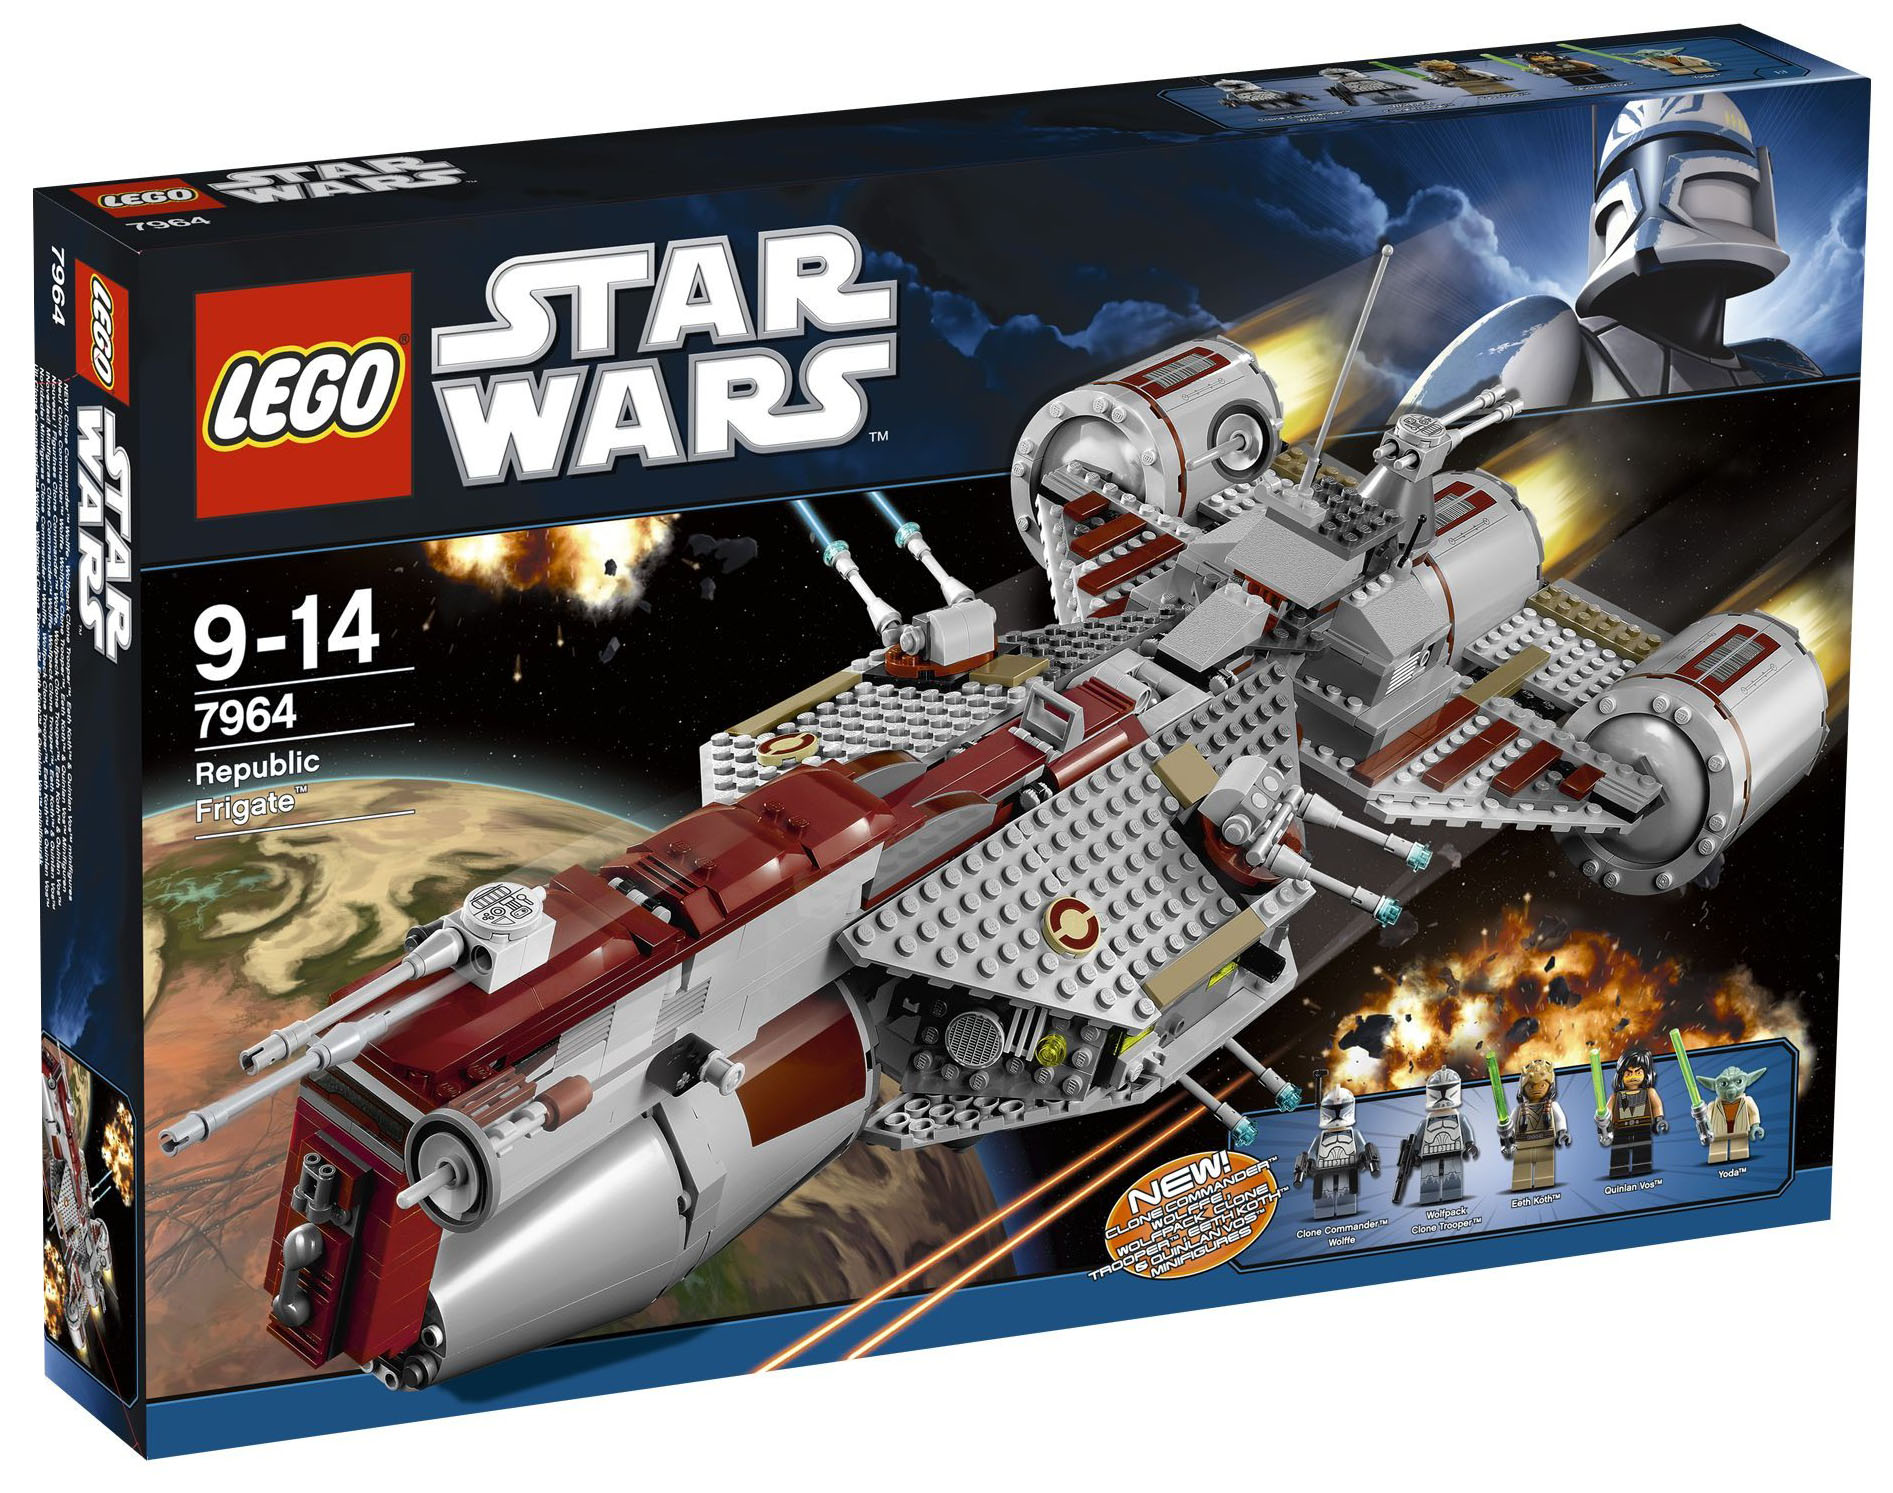 LEGO Star Wars 7964 pas cher, Republic Frigate